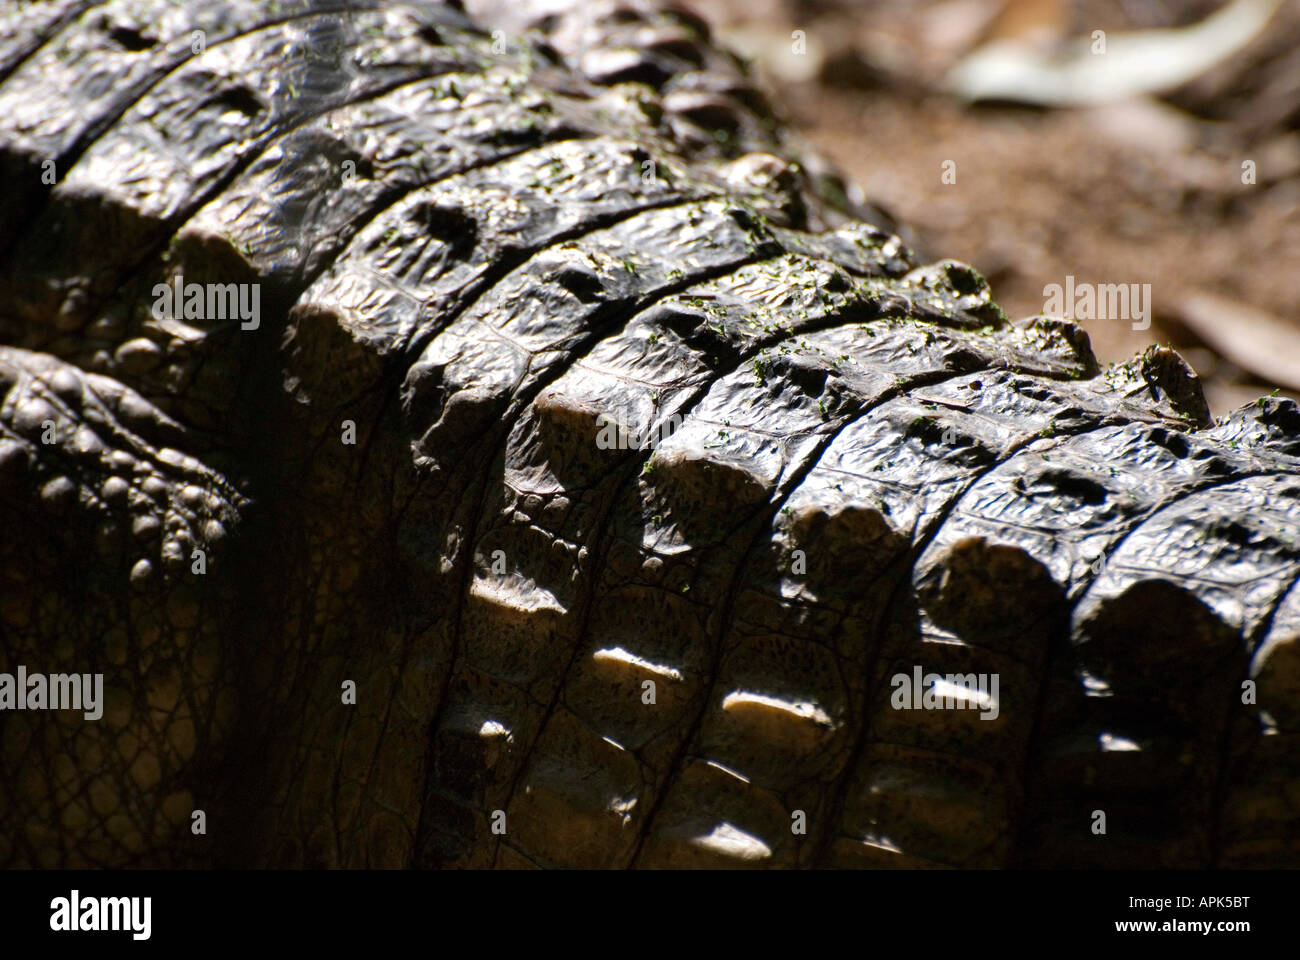 Crocodile Tail Scales Stock Photo